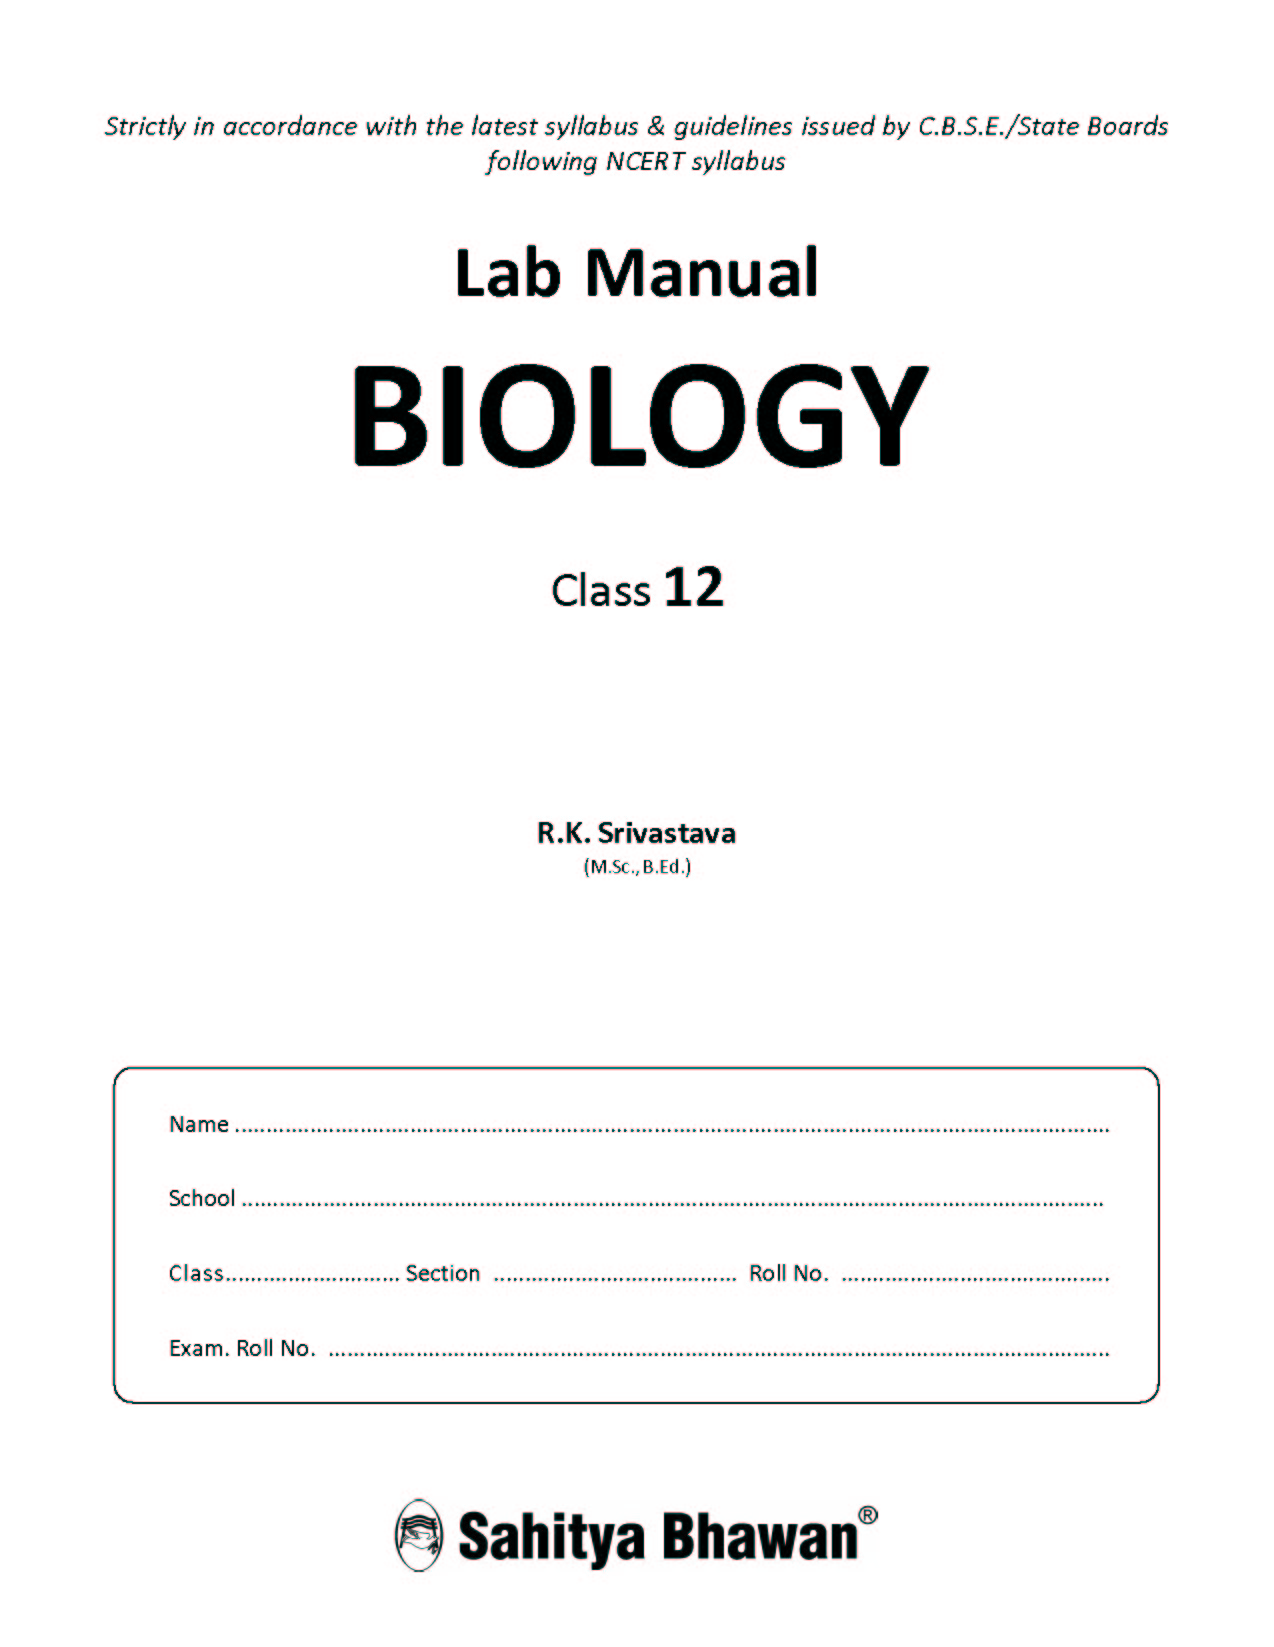 CBSE Lab Manual Practical Manual Biology for Class 12 - Sahitya Bhawan